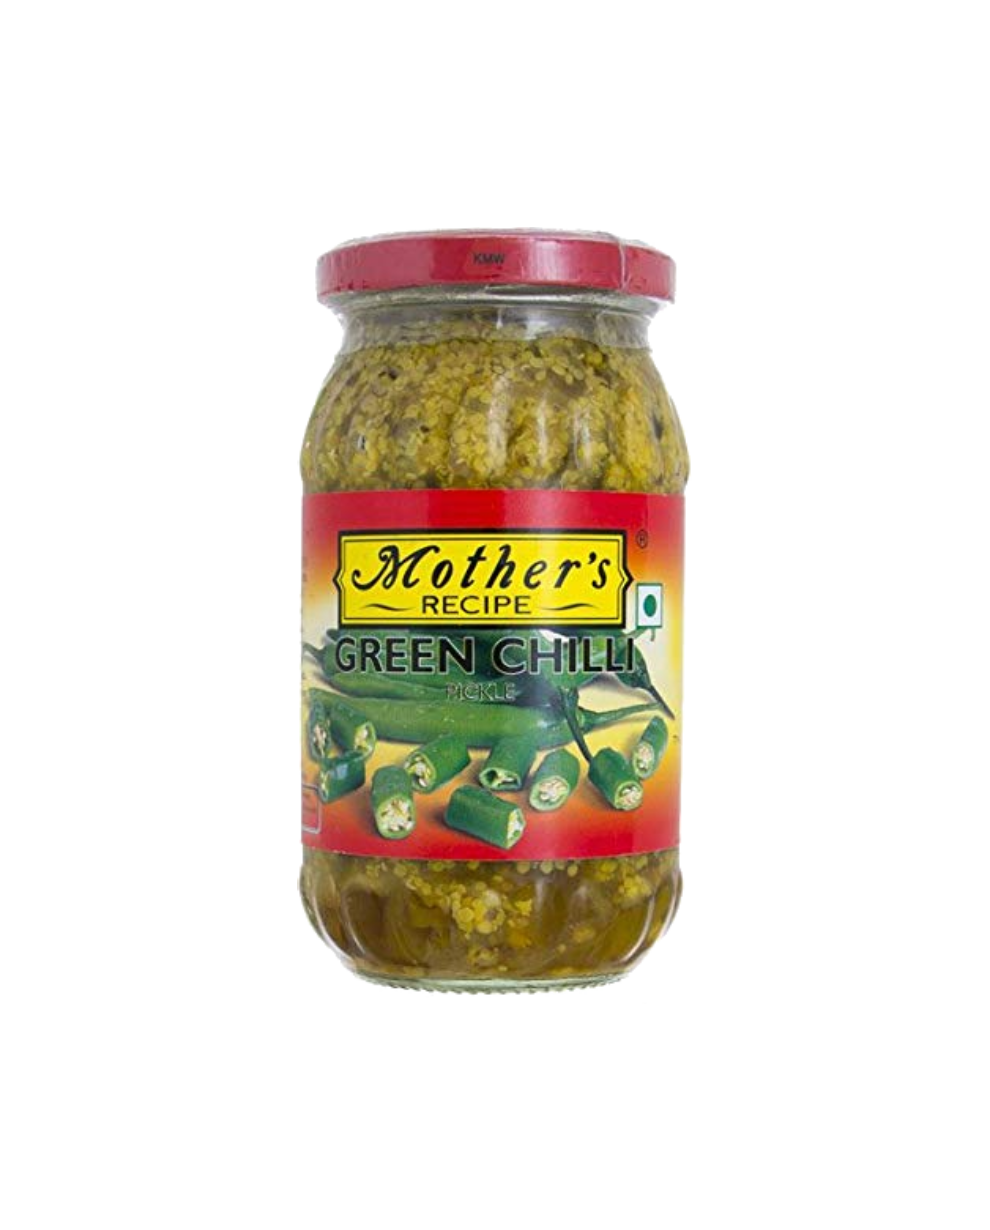 Green Chilli Pickle (300g)